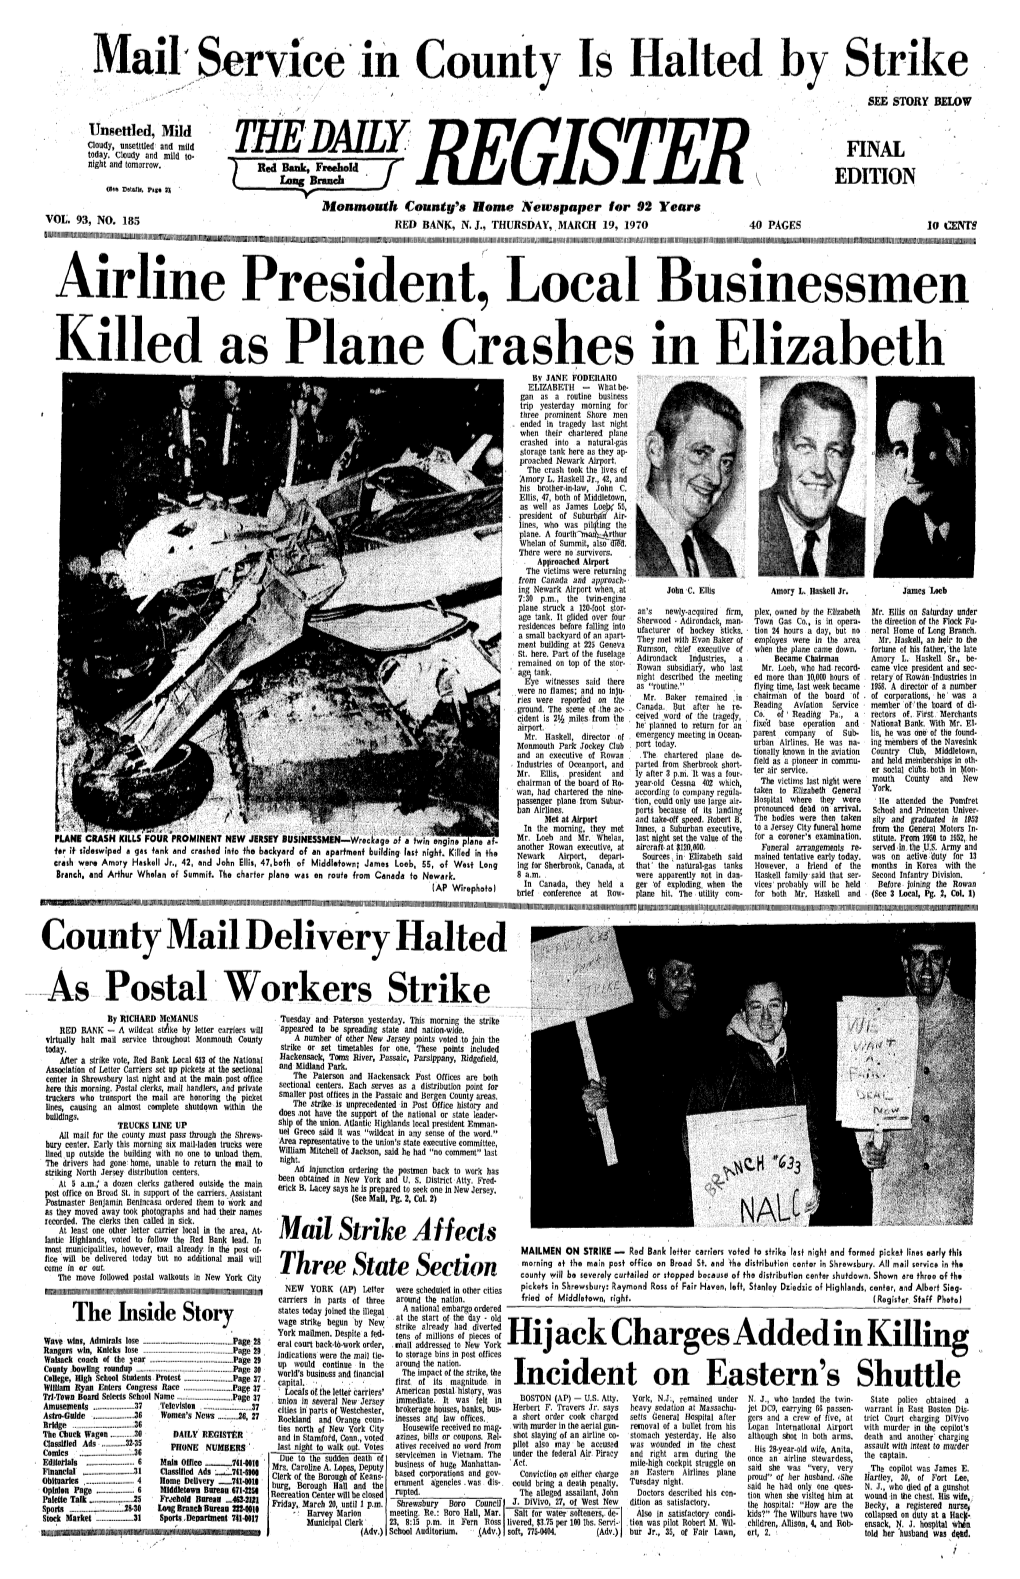 Airline President, Local Businessmen Killed As Plane Crashes in Elizabeth